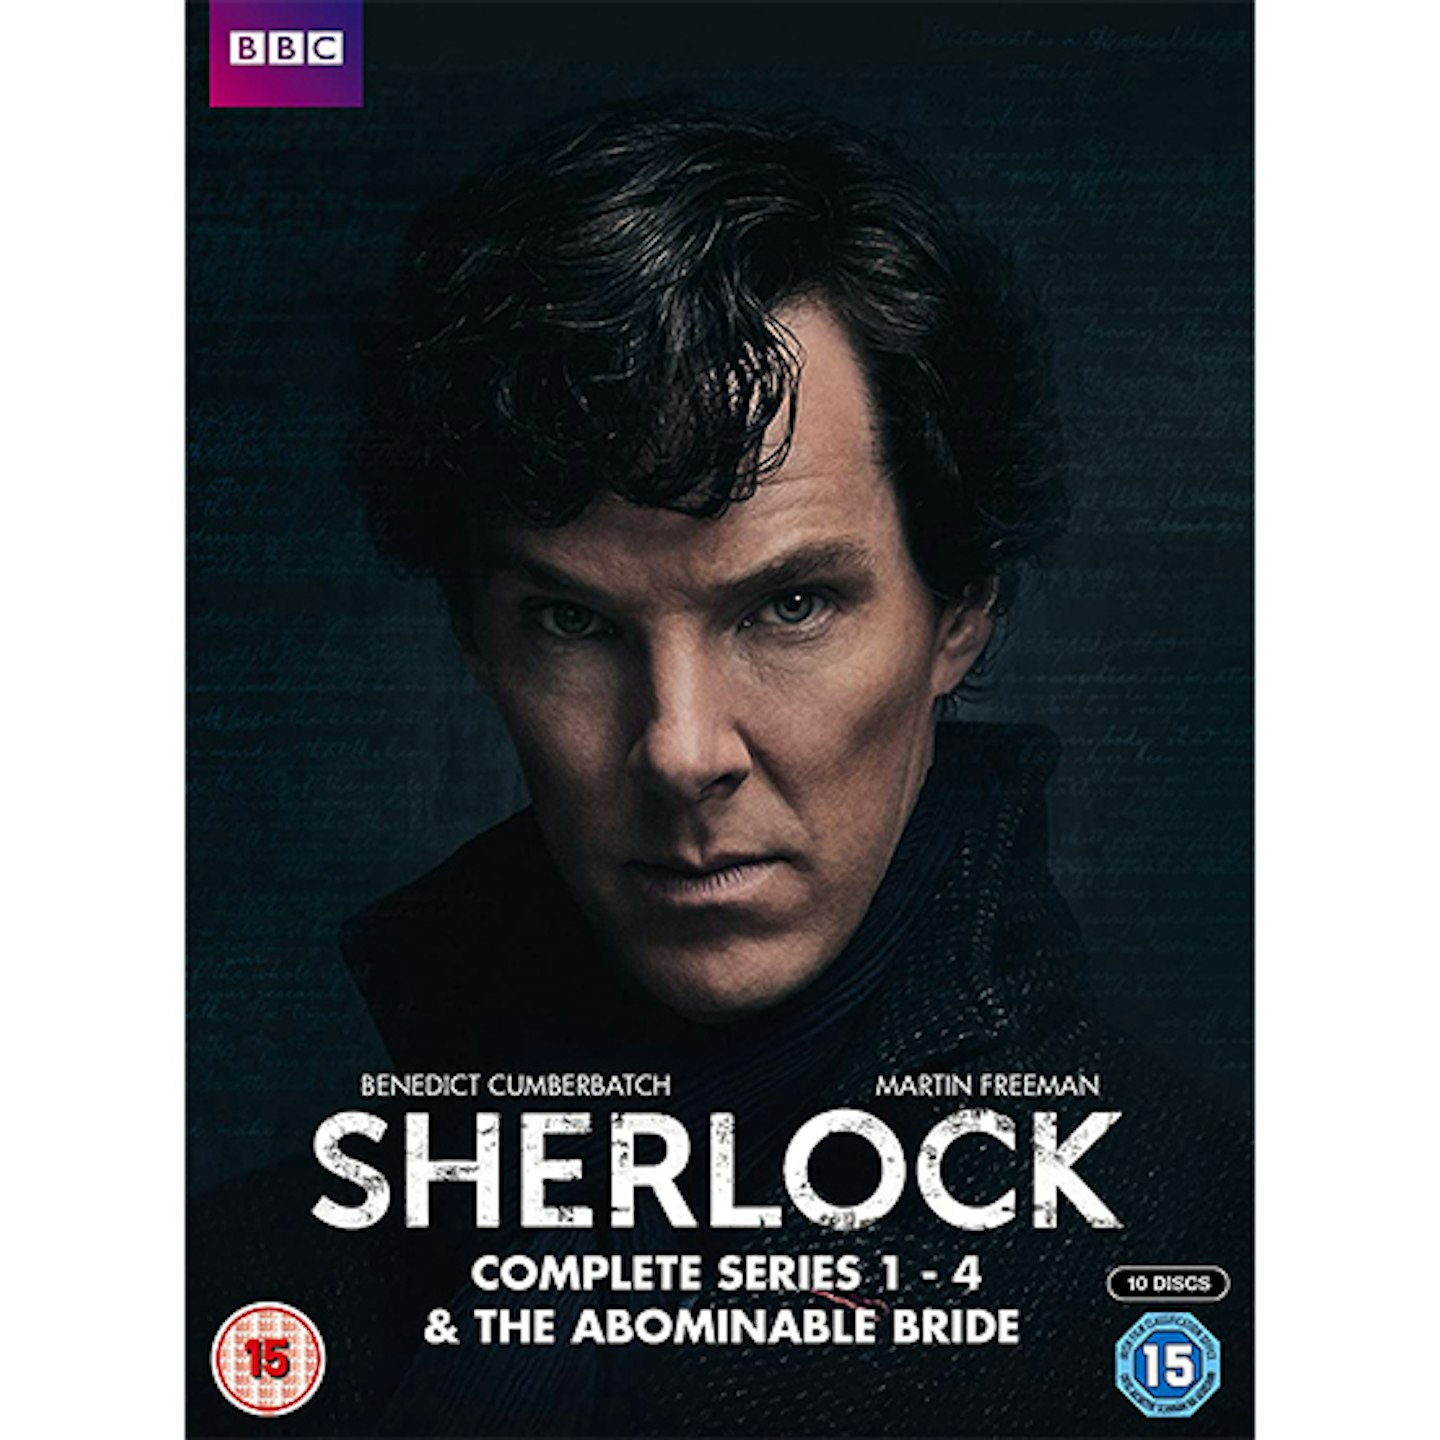 BBC Sherlock DVDs